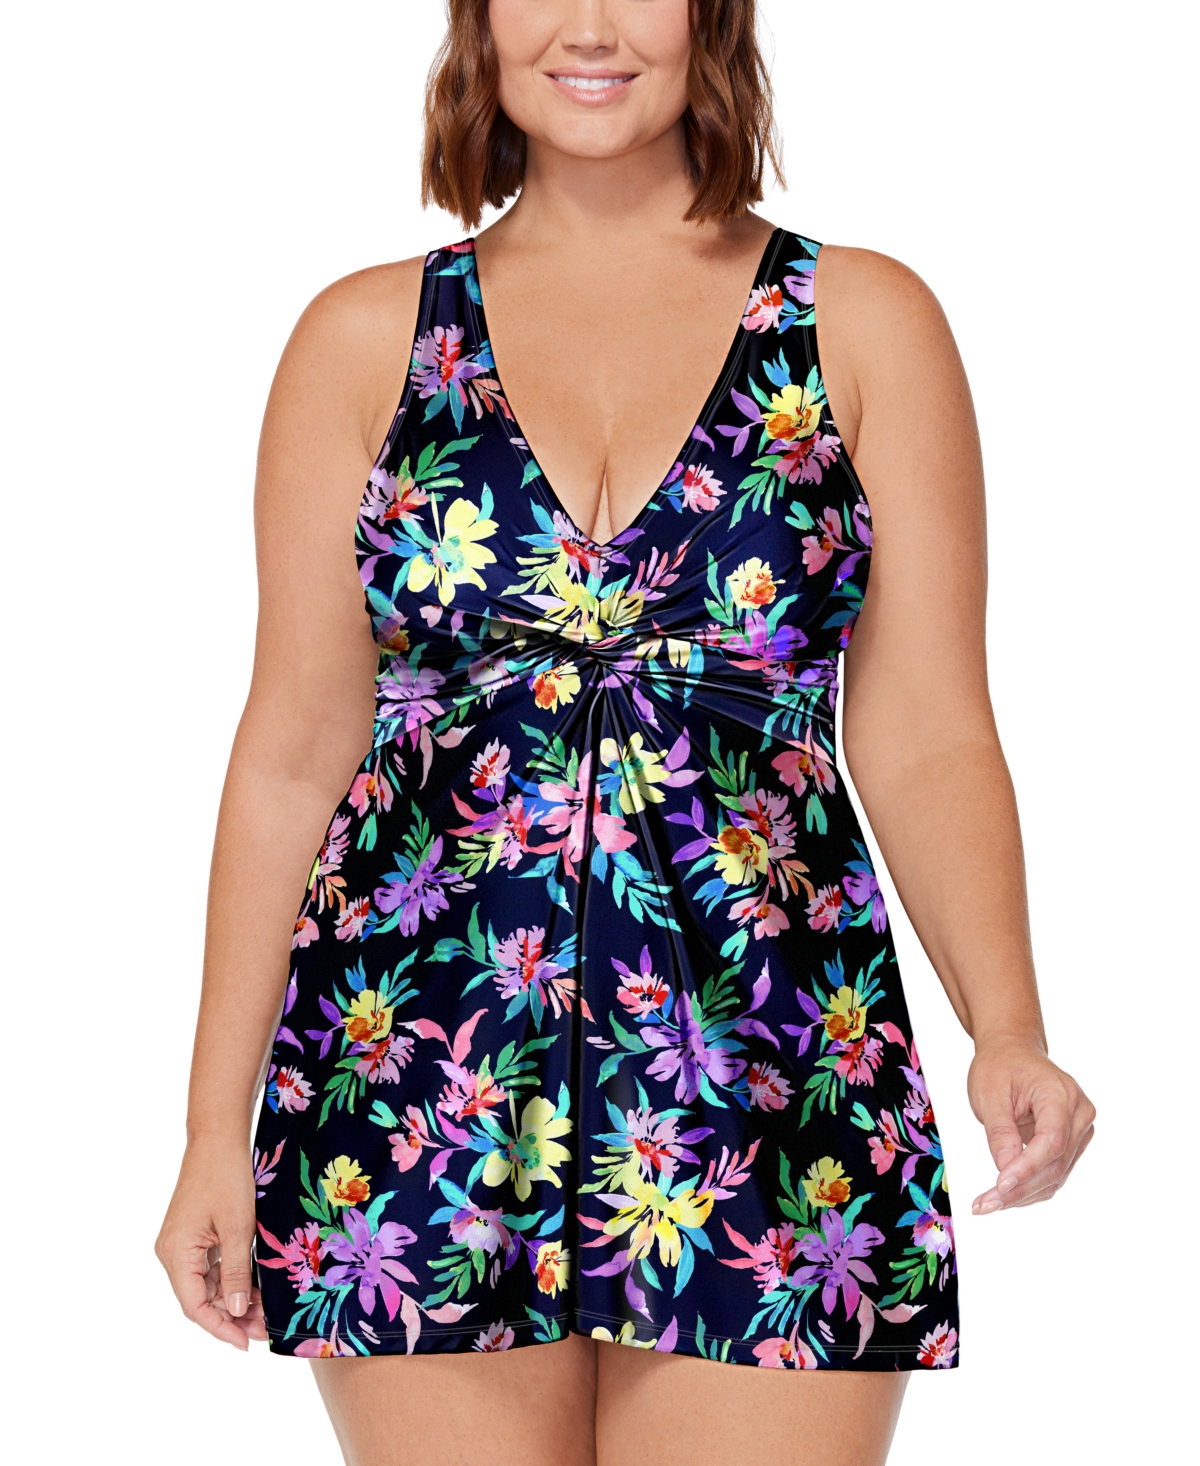 Plus Size Magnolia Floral-Print Swim Dress, Created for Macy's - Black Multi